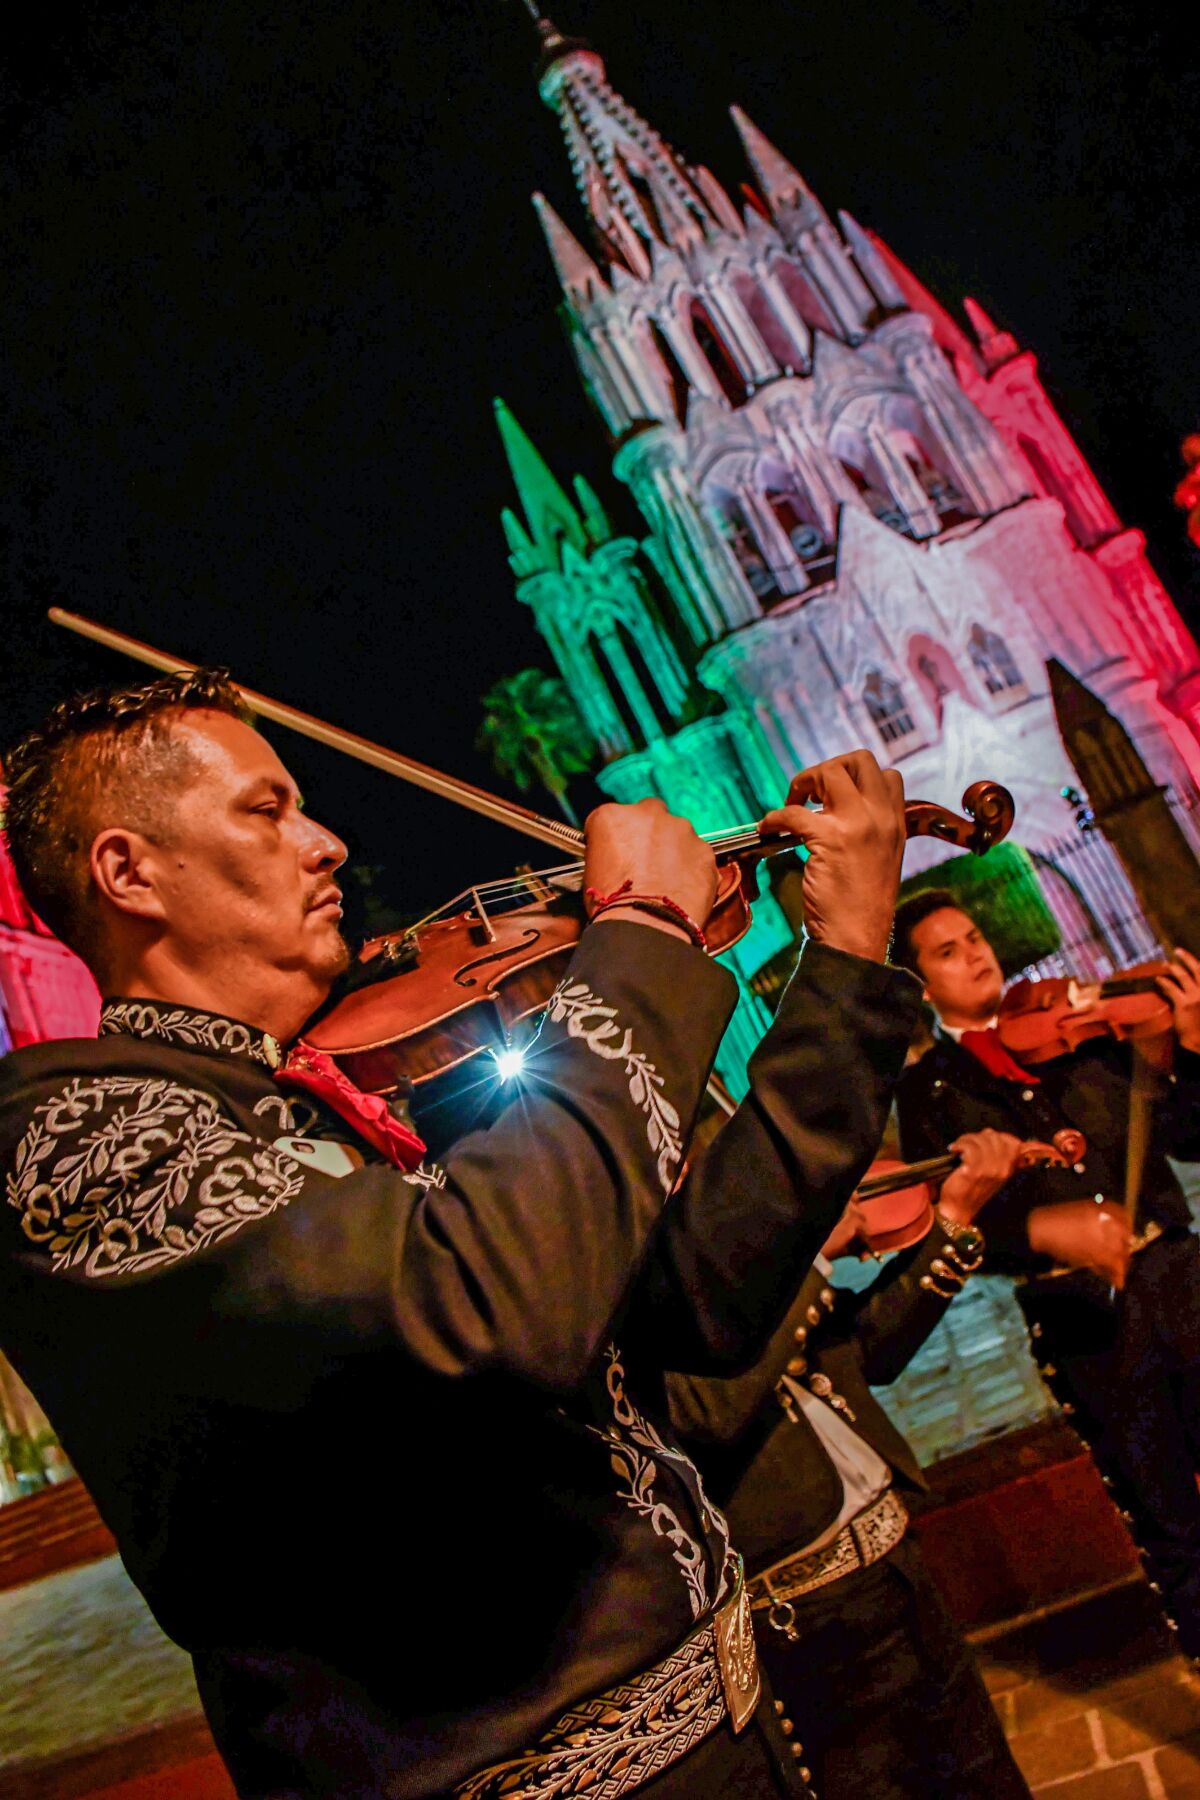 Musicians gather nightly at El Jardin, the central plaza of San Miguel de Allende